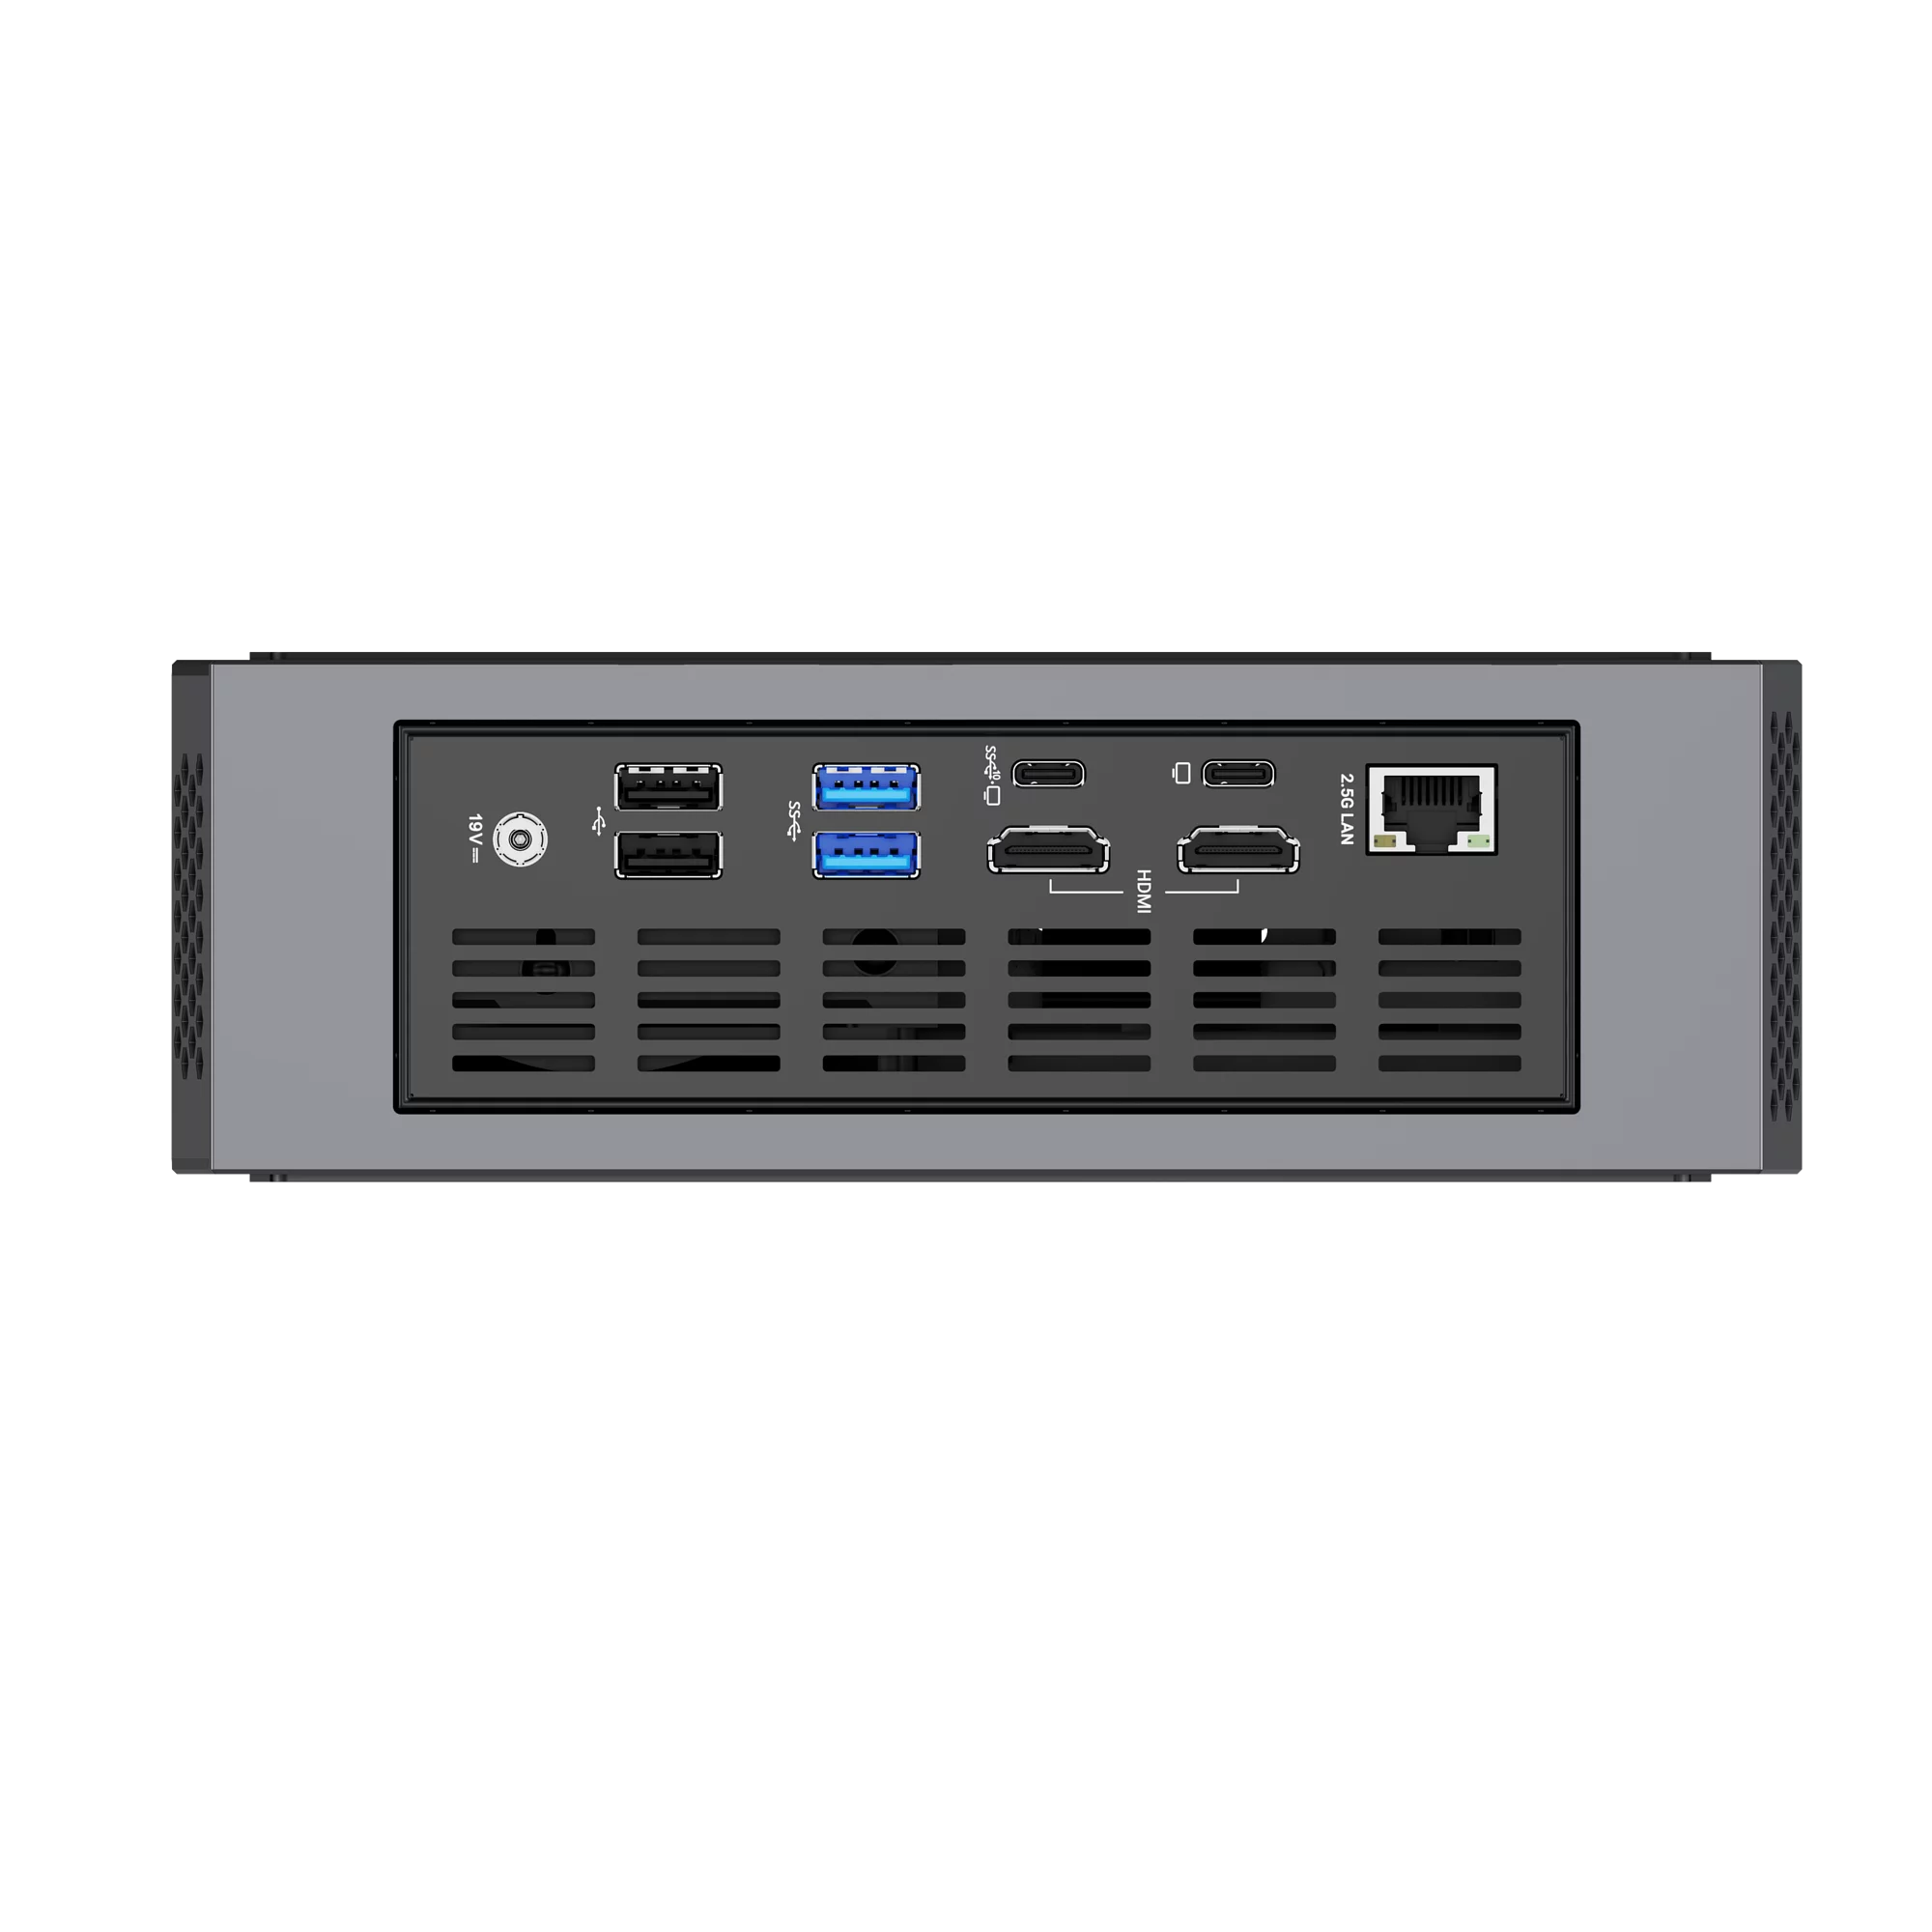 Minisforum Neptune NAD9 Mini PC 迷你電腦 (i9-12900H、16GB DDR4 RAM、512GB SSD、Windows 11 Home) 免費升級至3 年保養